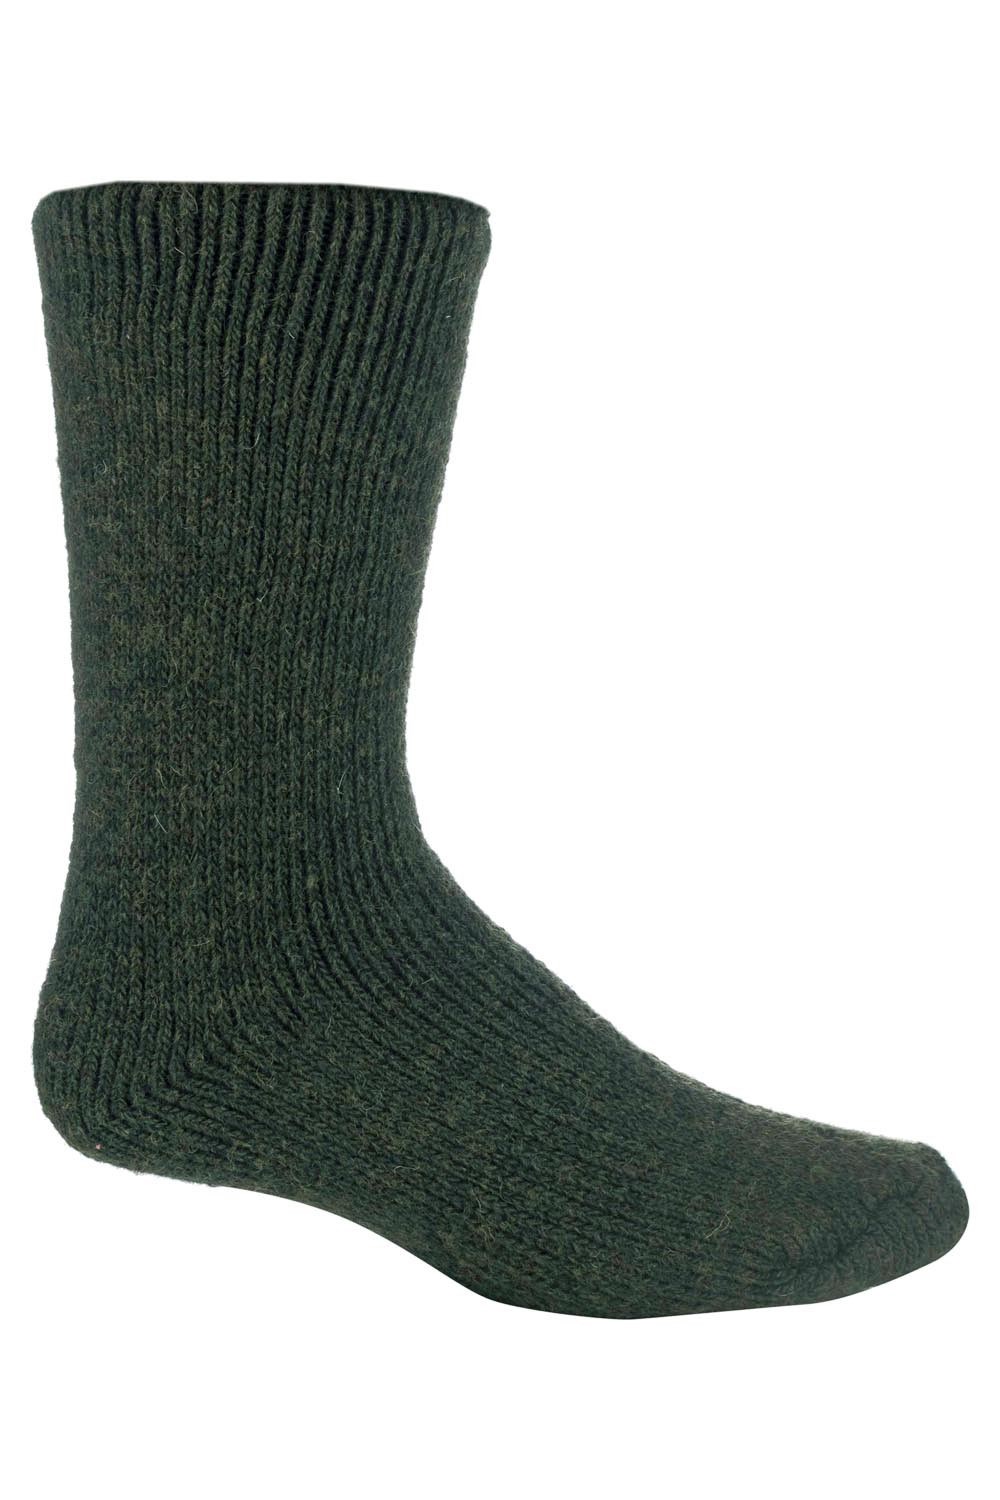 Mens Thick Thermal Wool Socks